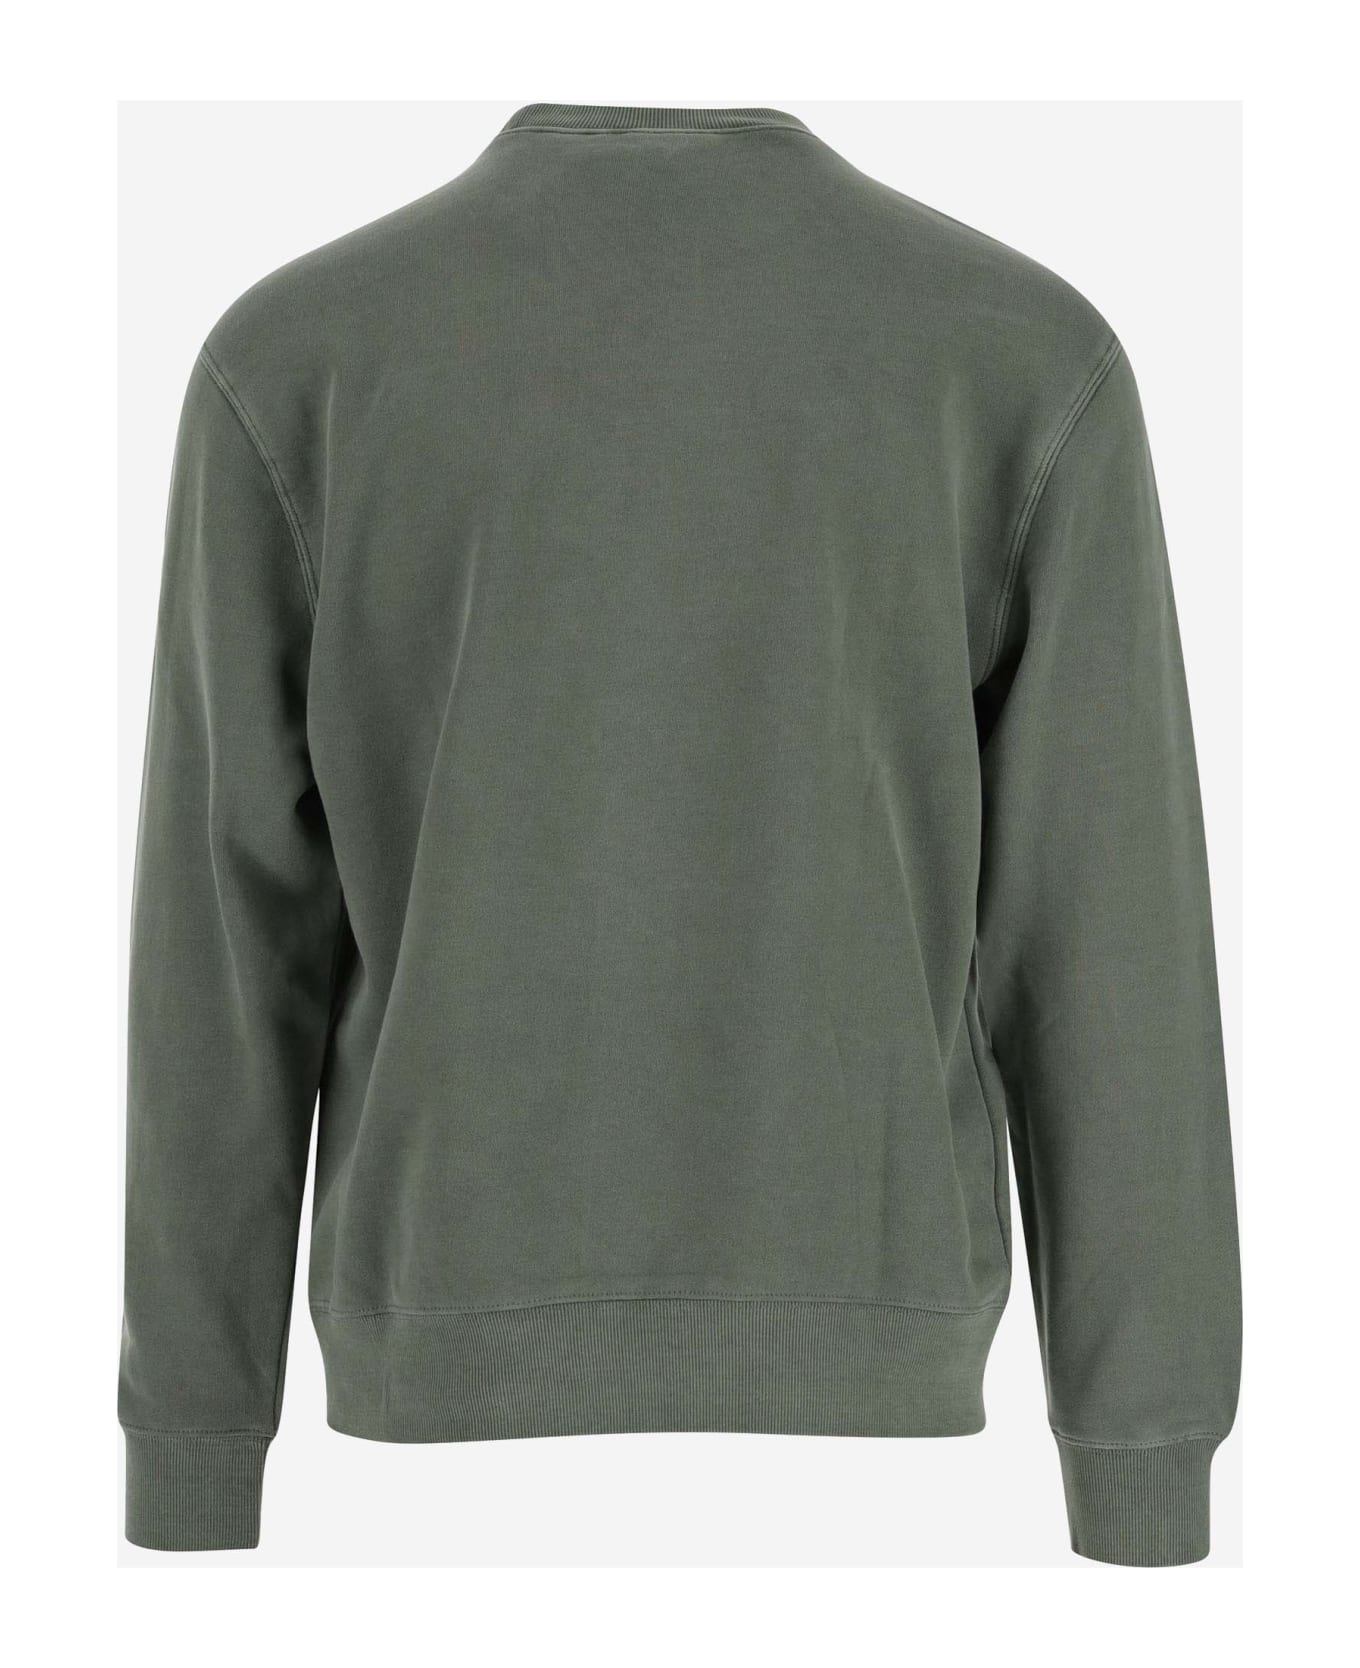 Carhartt Cotton Sweatshirt - Yfgd Park Garment Dyed